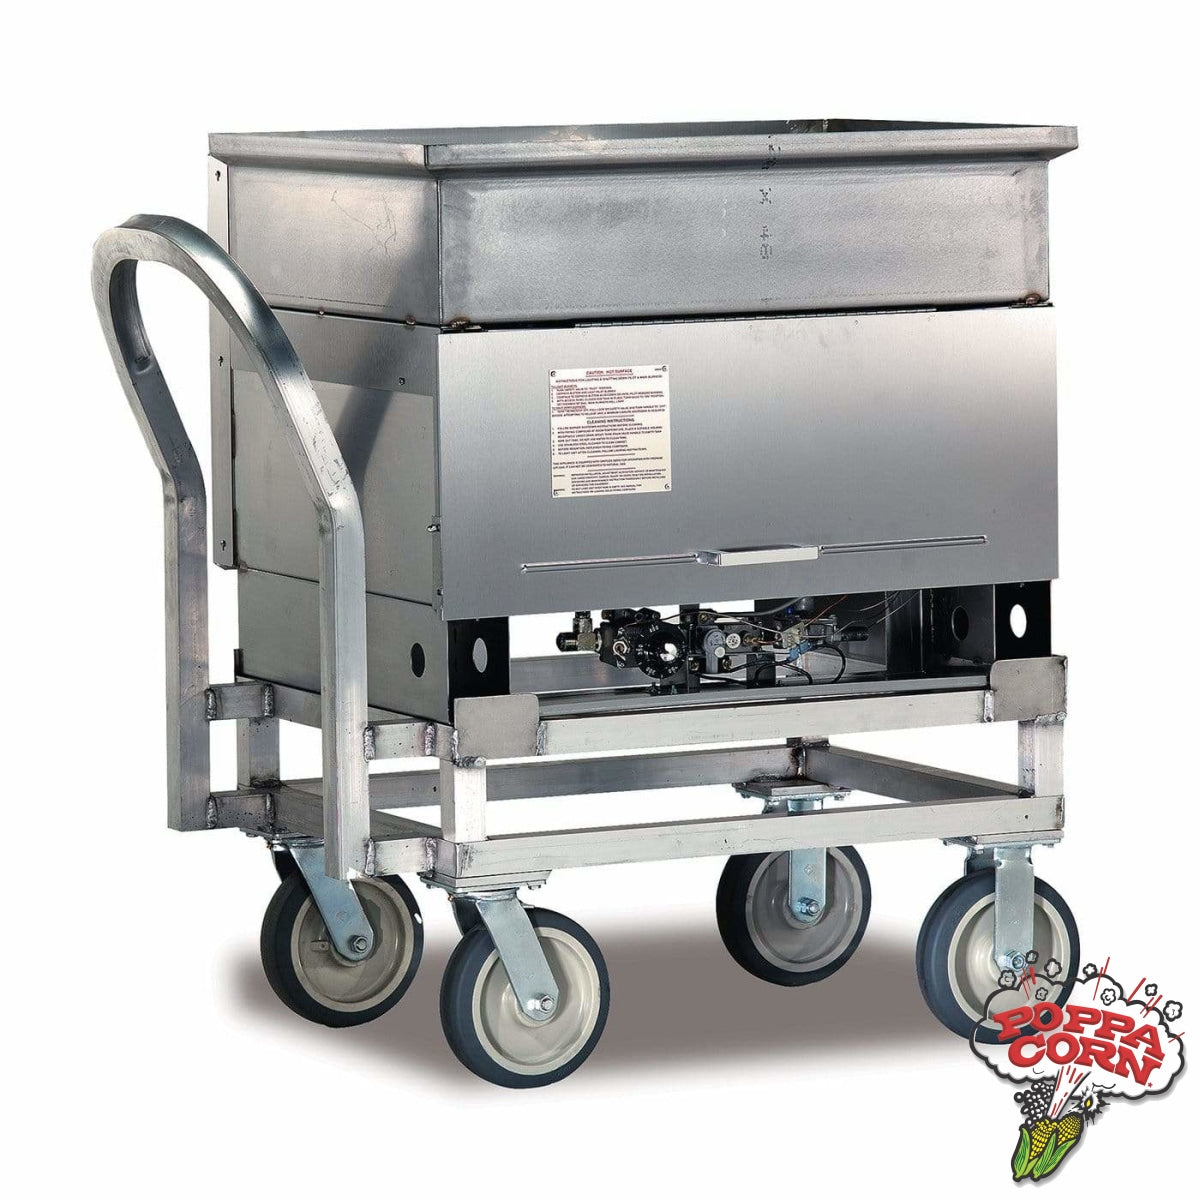 Fried Food Wagon - Low Boy Cart GM5096 - Poppa Corn Corp